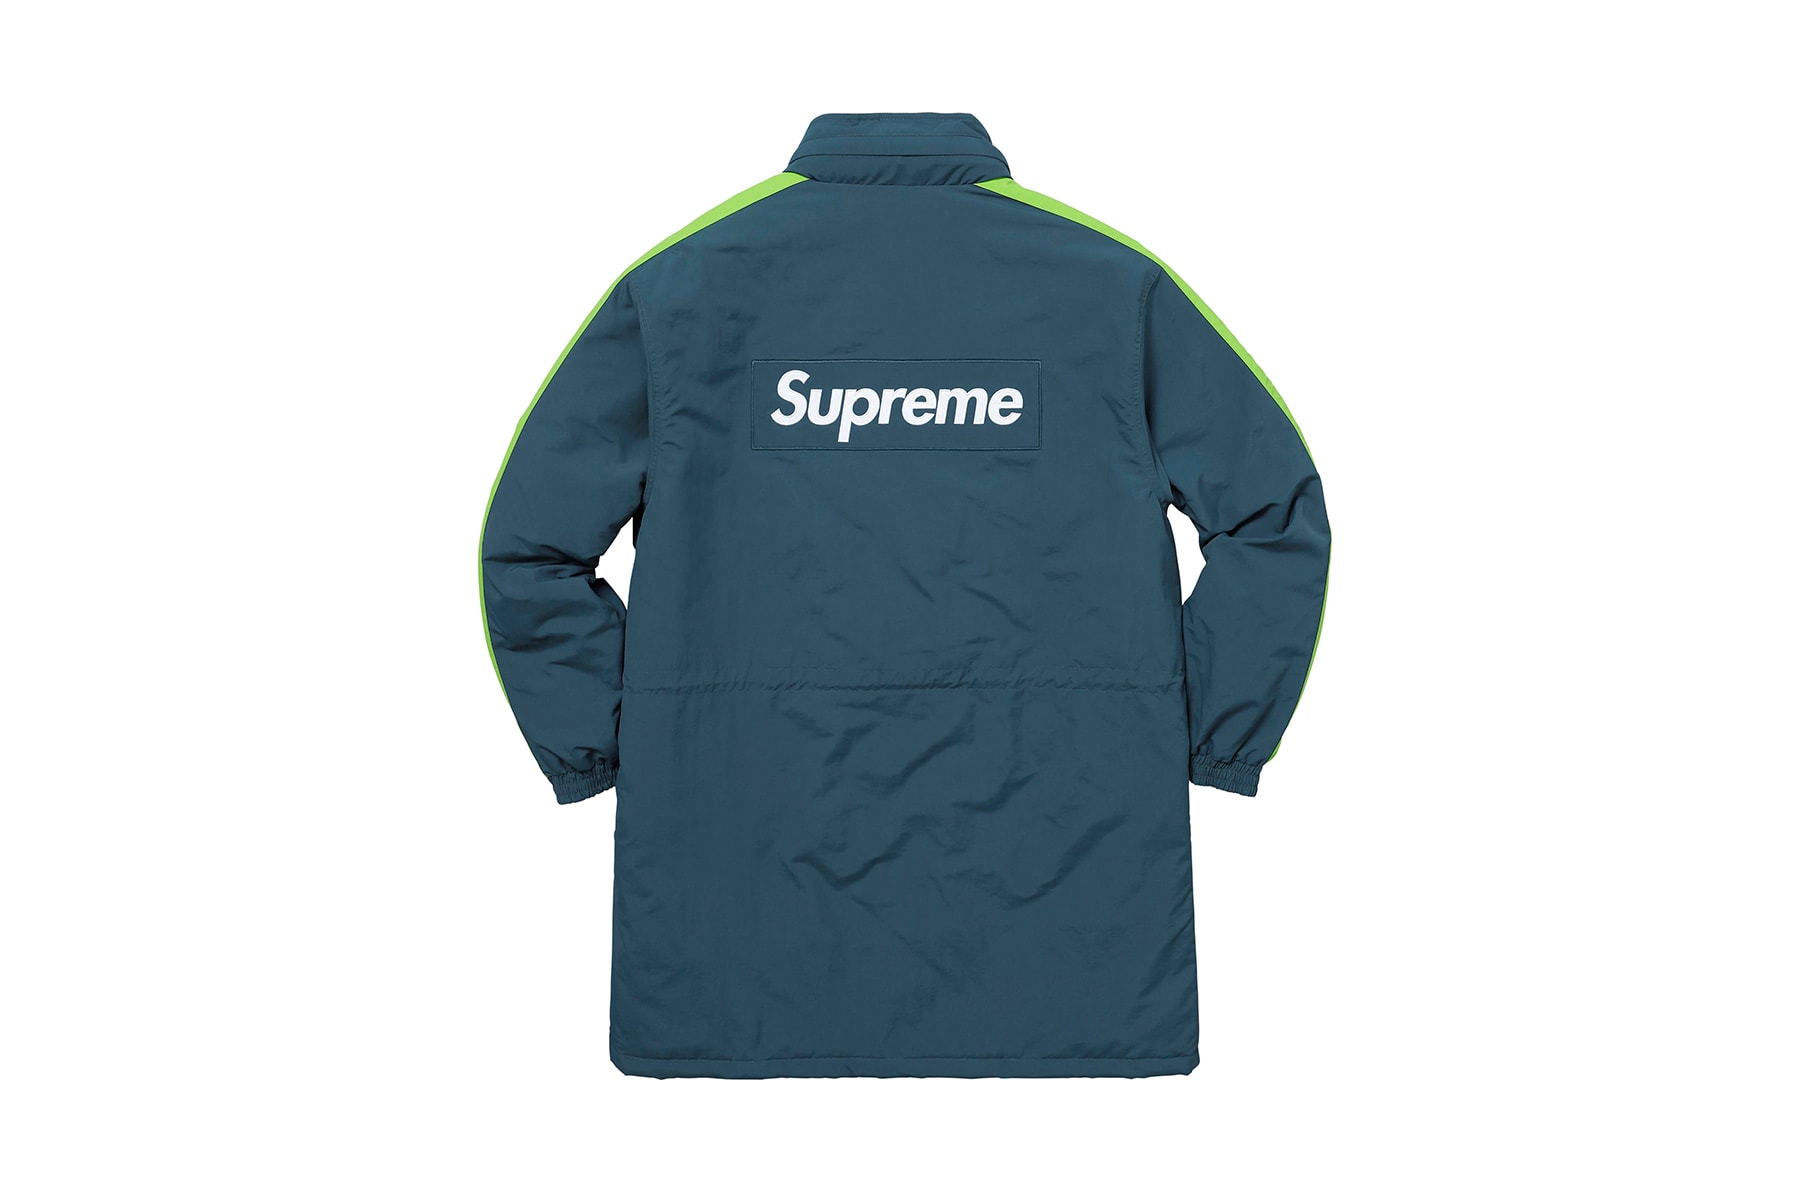 Supreme 2017 Fall/Winter Jackets